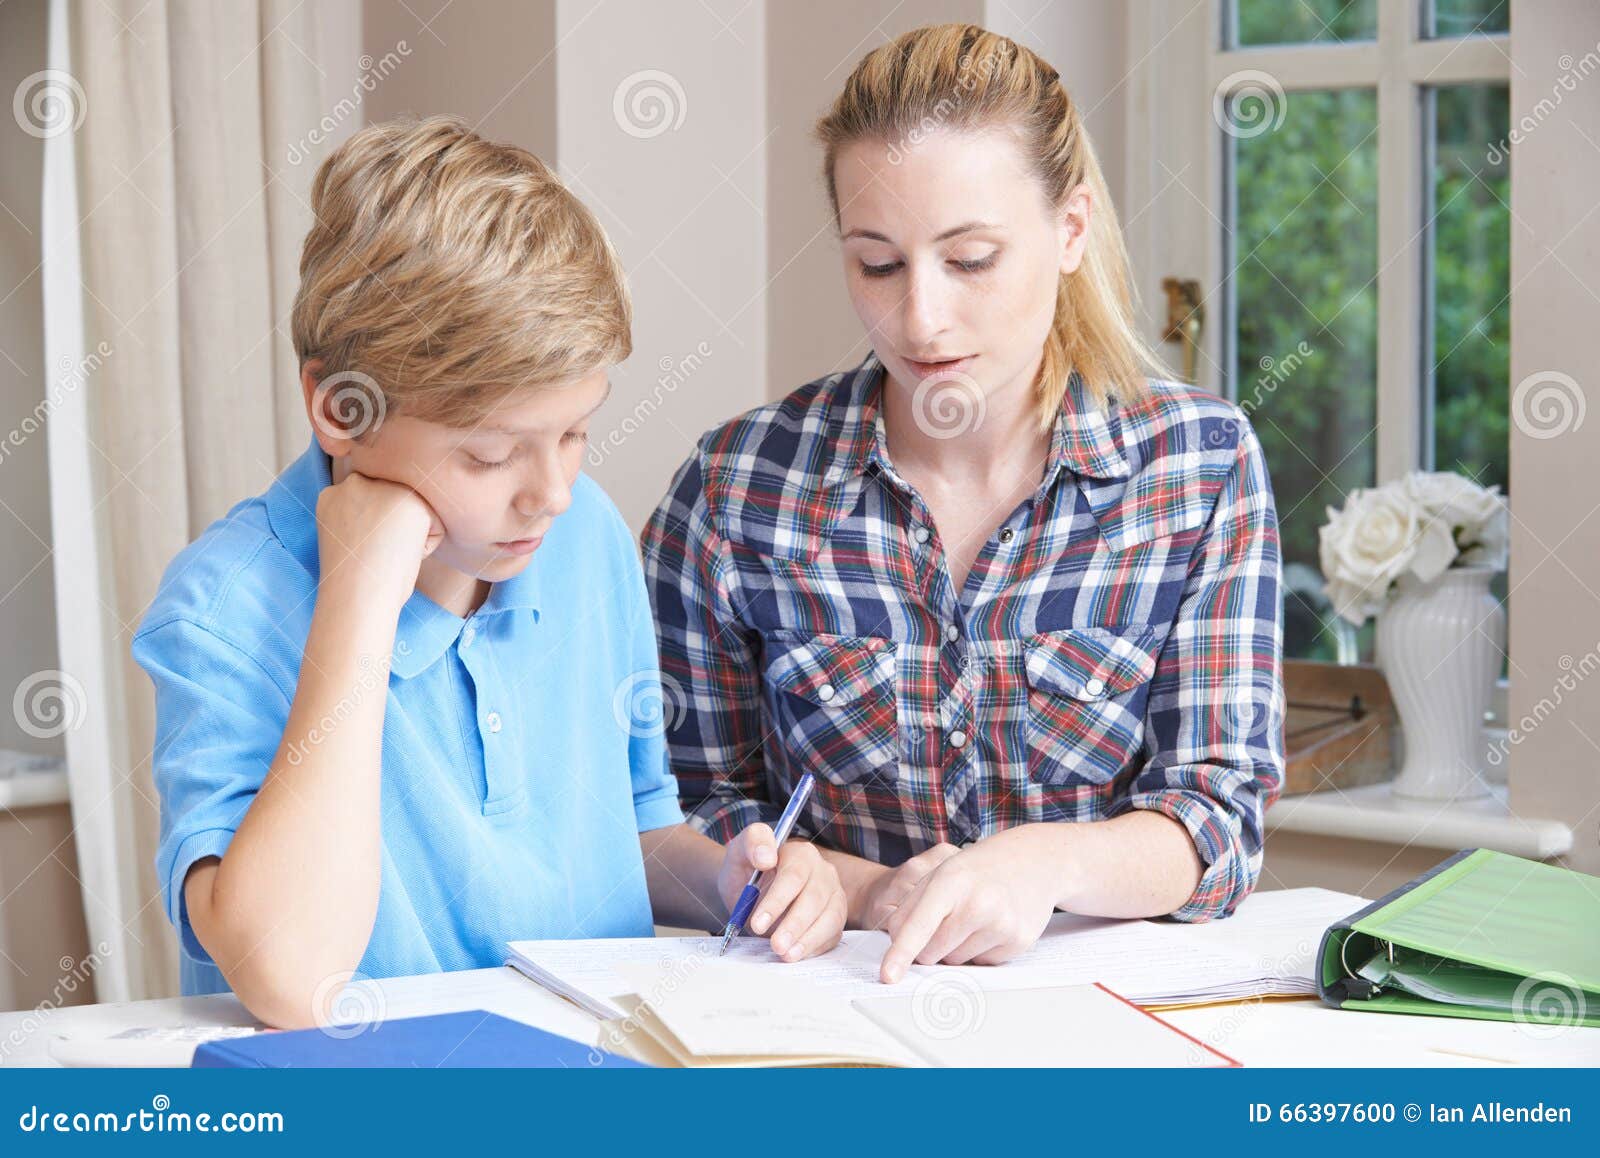 female home tutor helping boy with studies